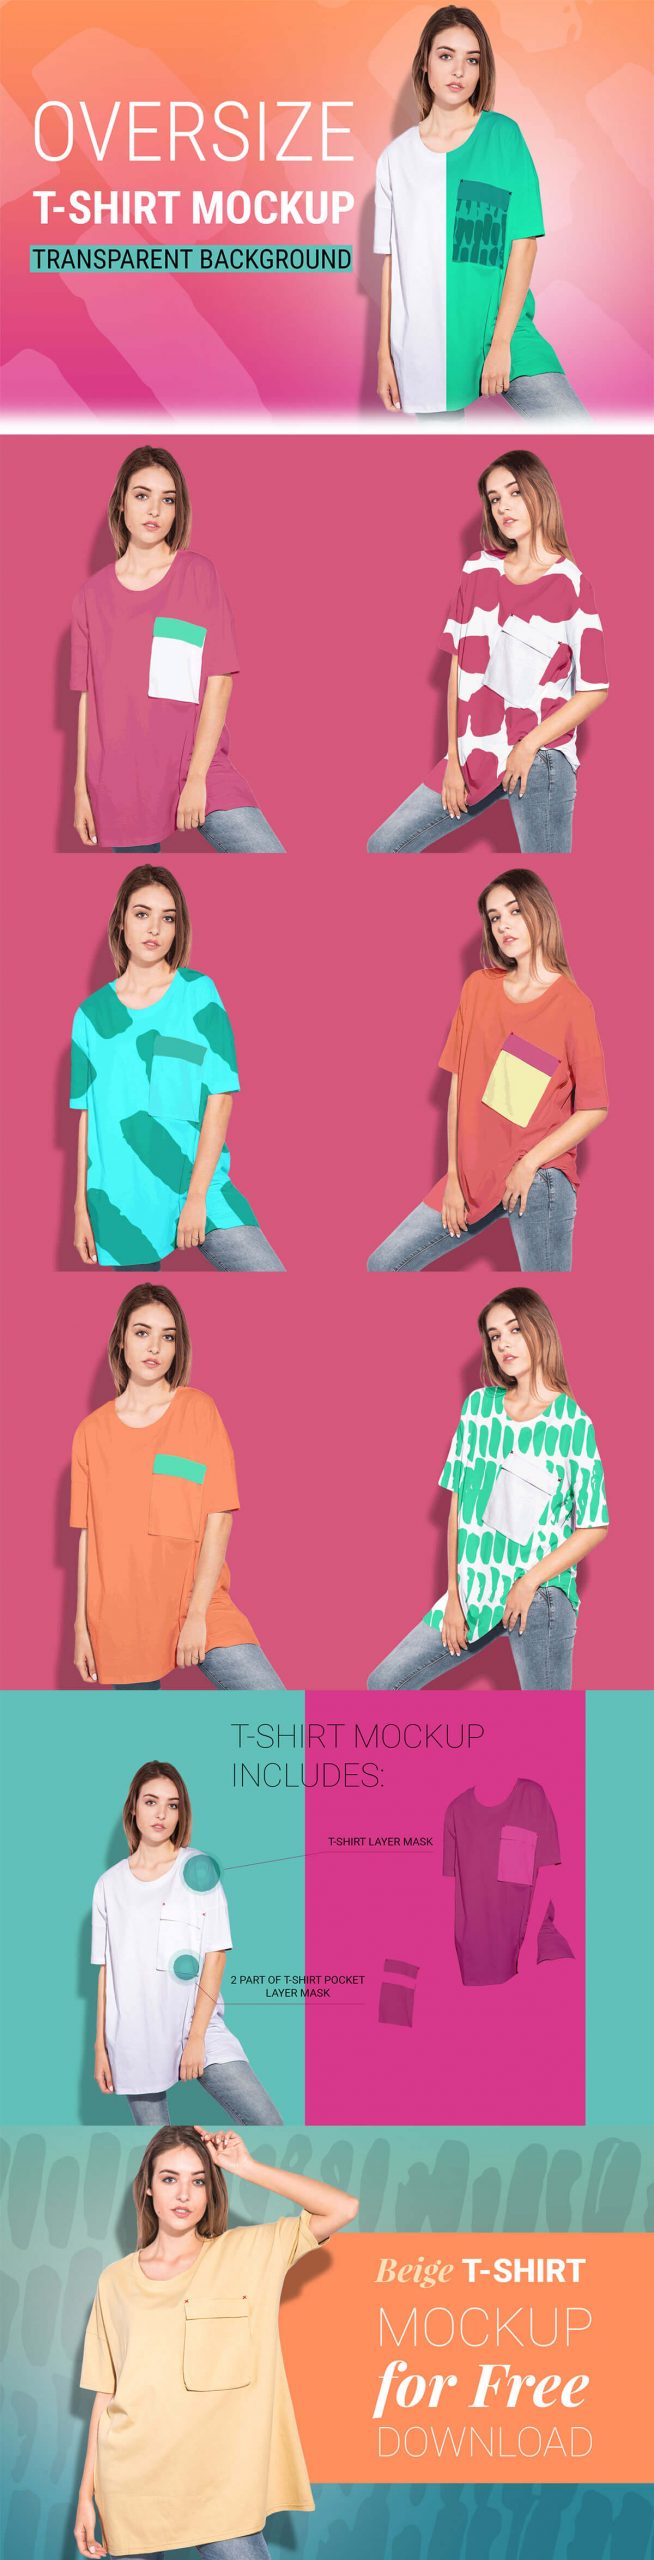 Woman Oversize T-Shirt Set Mockup Free Download